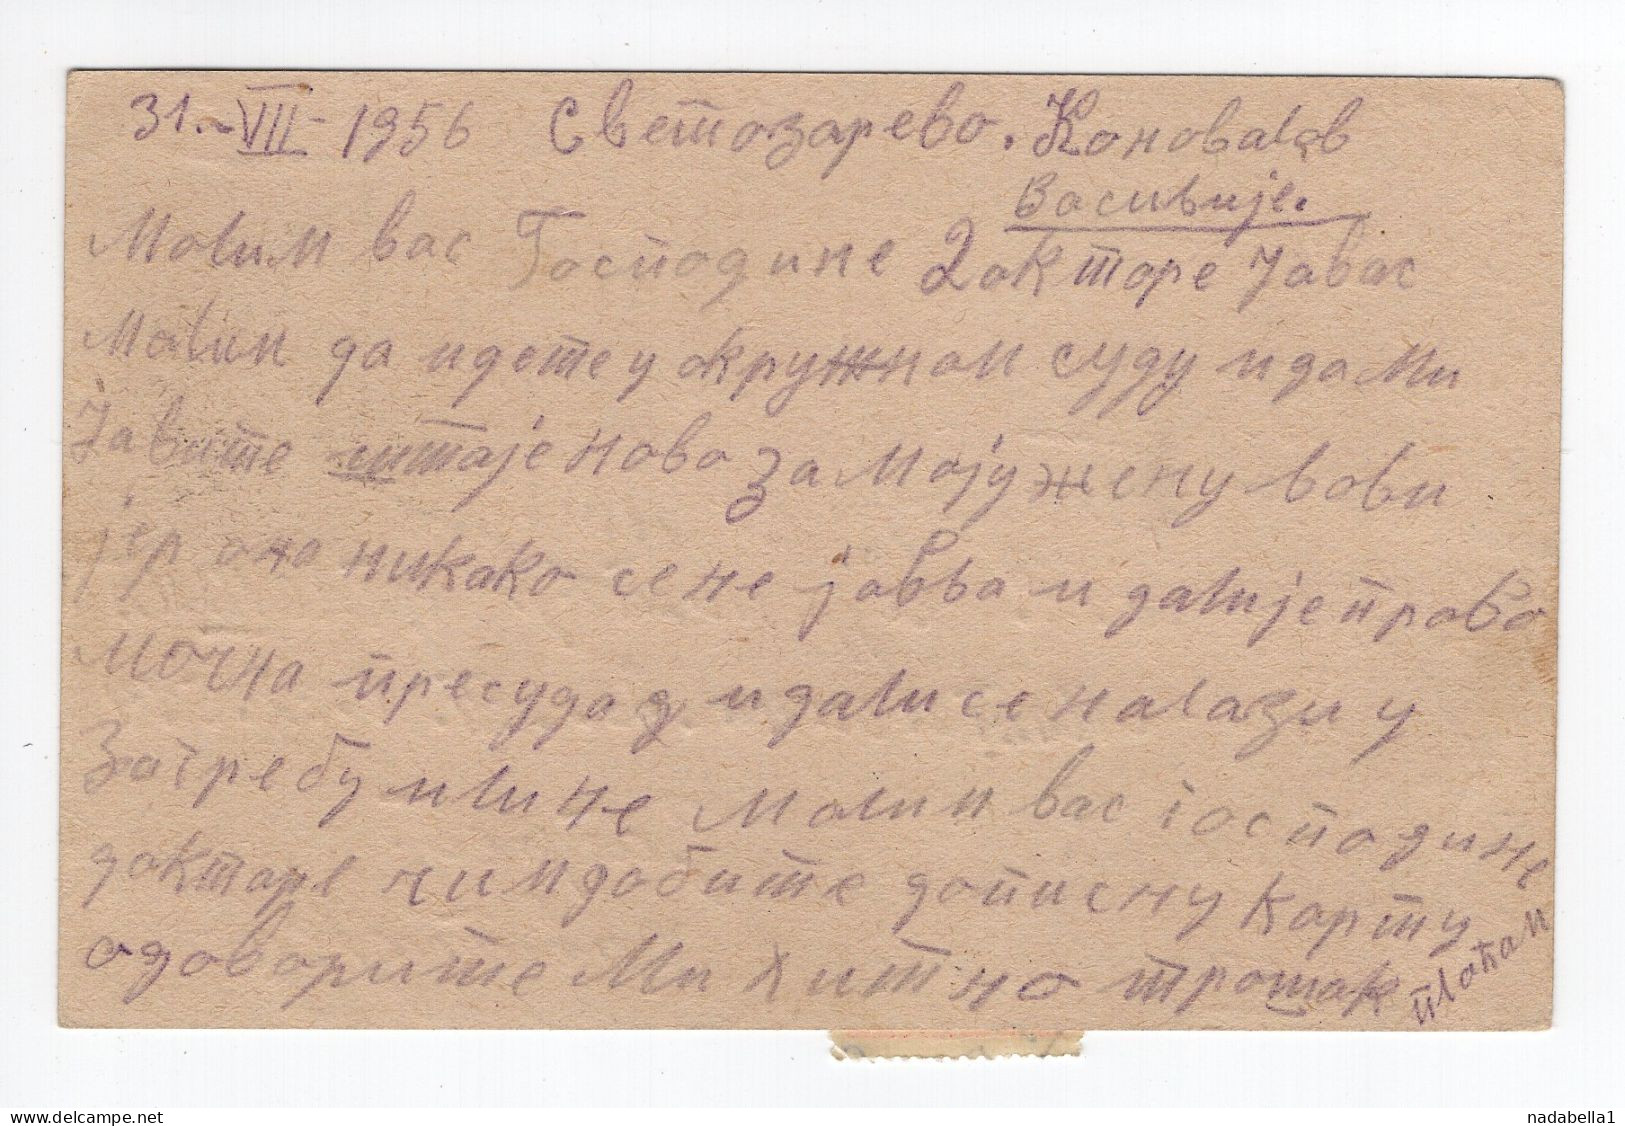 1956. YUGOSLAVIA,SERBIA,SVETOZAREVO,POSTAGE DUE IN ZAGREB,STATIONERY CARD,USED - Timbres-taxe